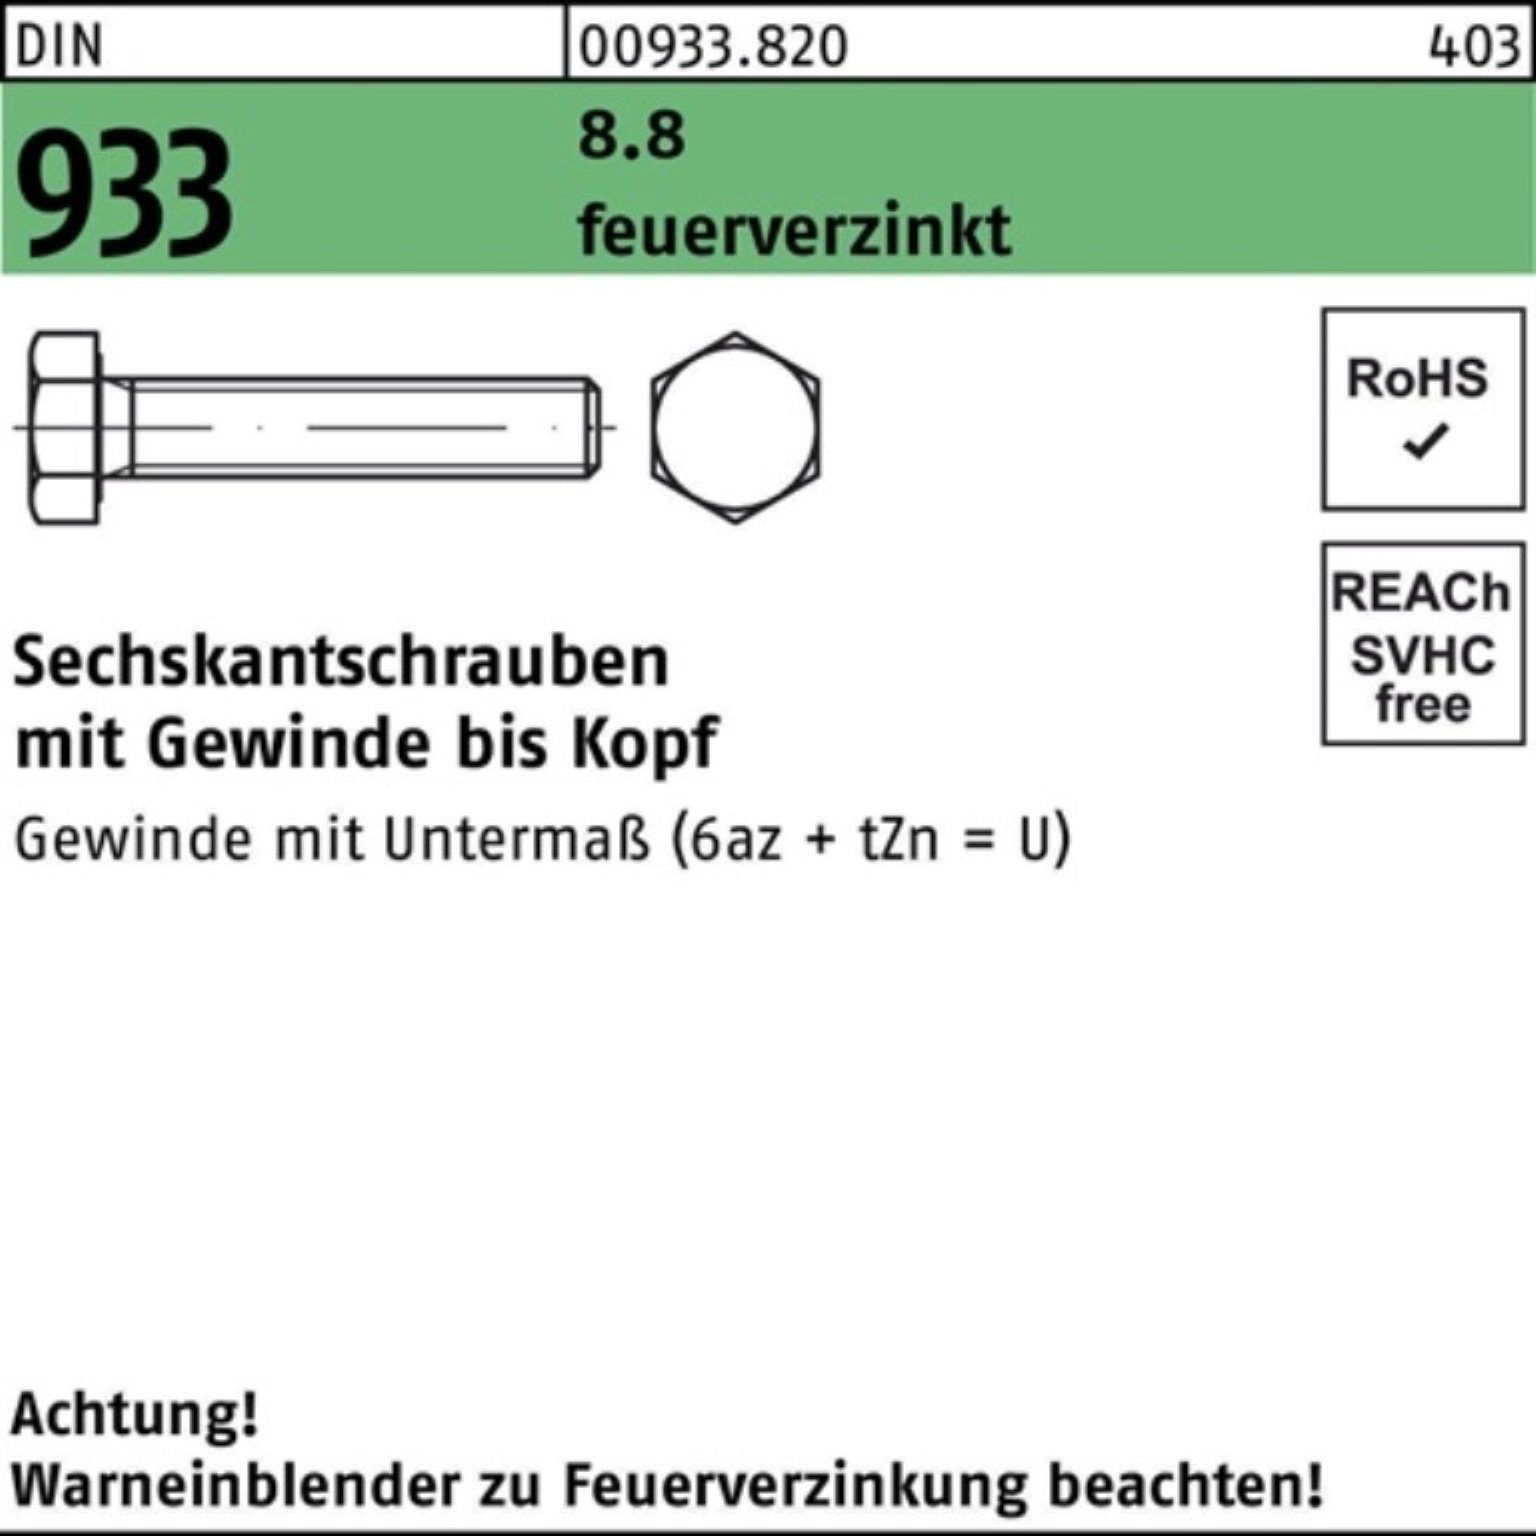 Reyher Sechskantschraube 100er Pack Sechskantschraube DIN Stü feuerverz. 90 VG 50 8.8 933 M12x